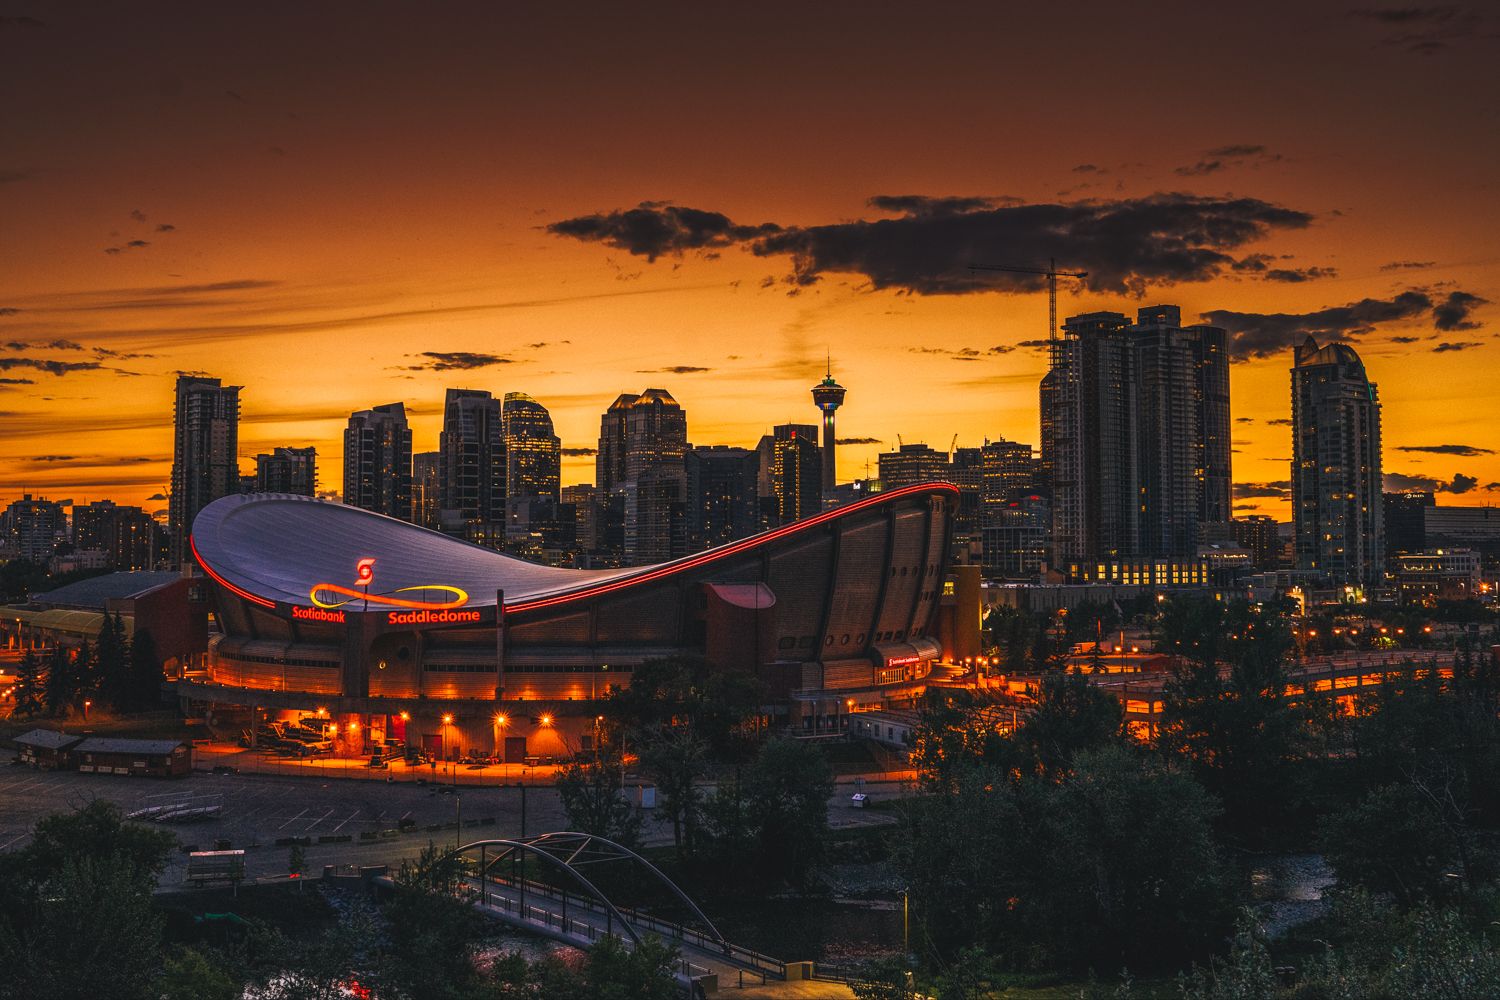 Downtown-Calgary-Sunset.jpg